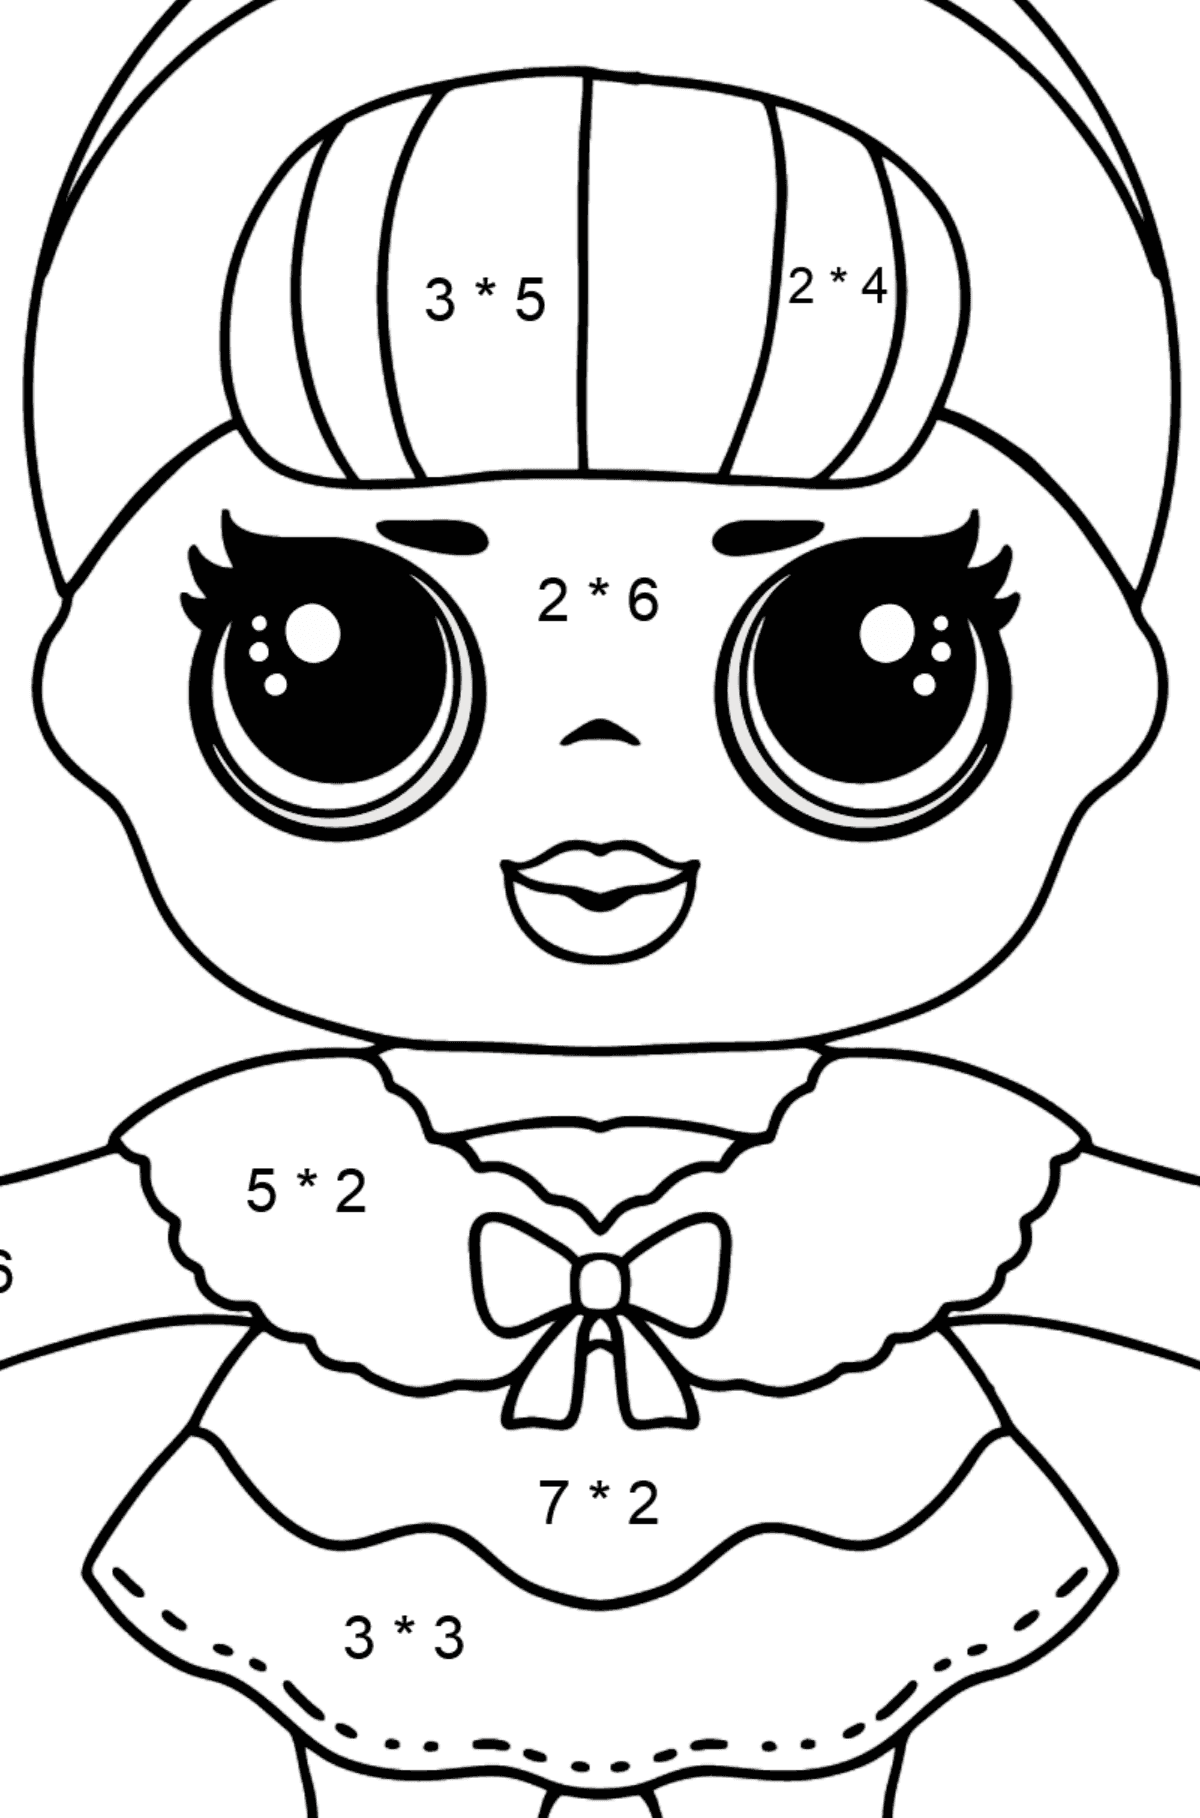 Розмальовка ляльки ЛОЛ Crystal Queen - Математична Розмальовка Множення для дітей